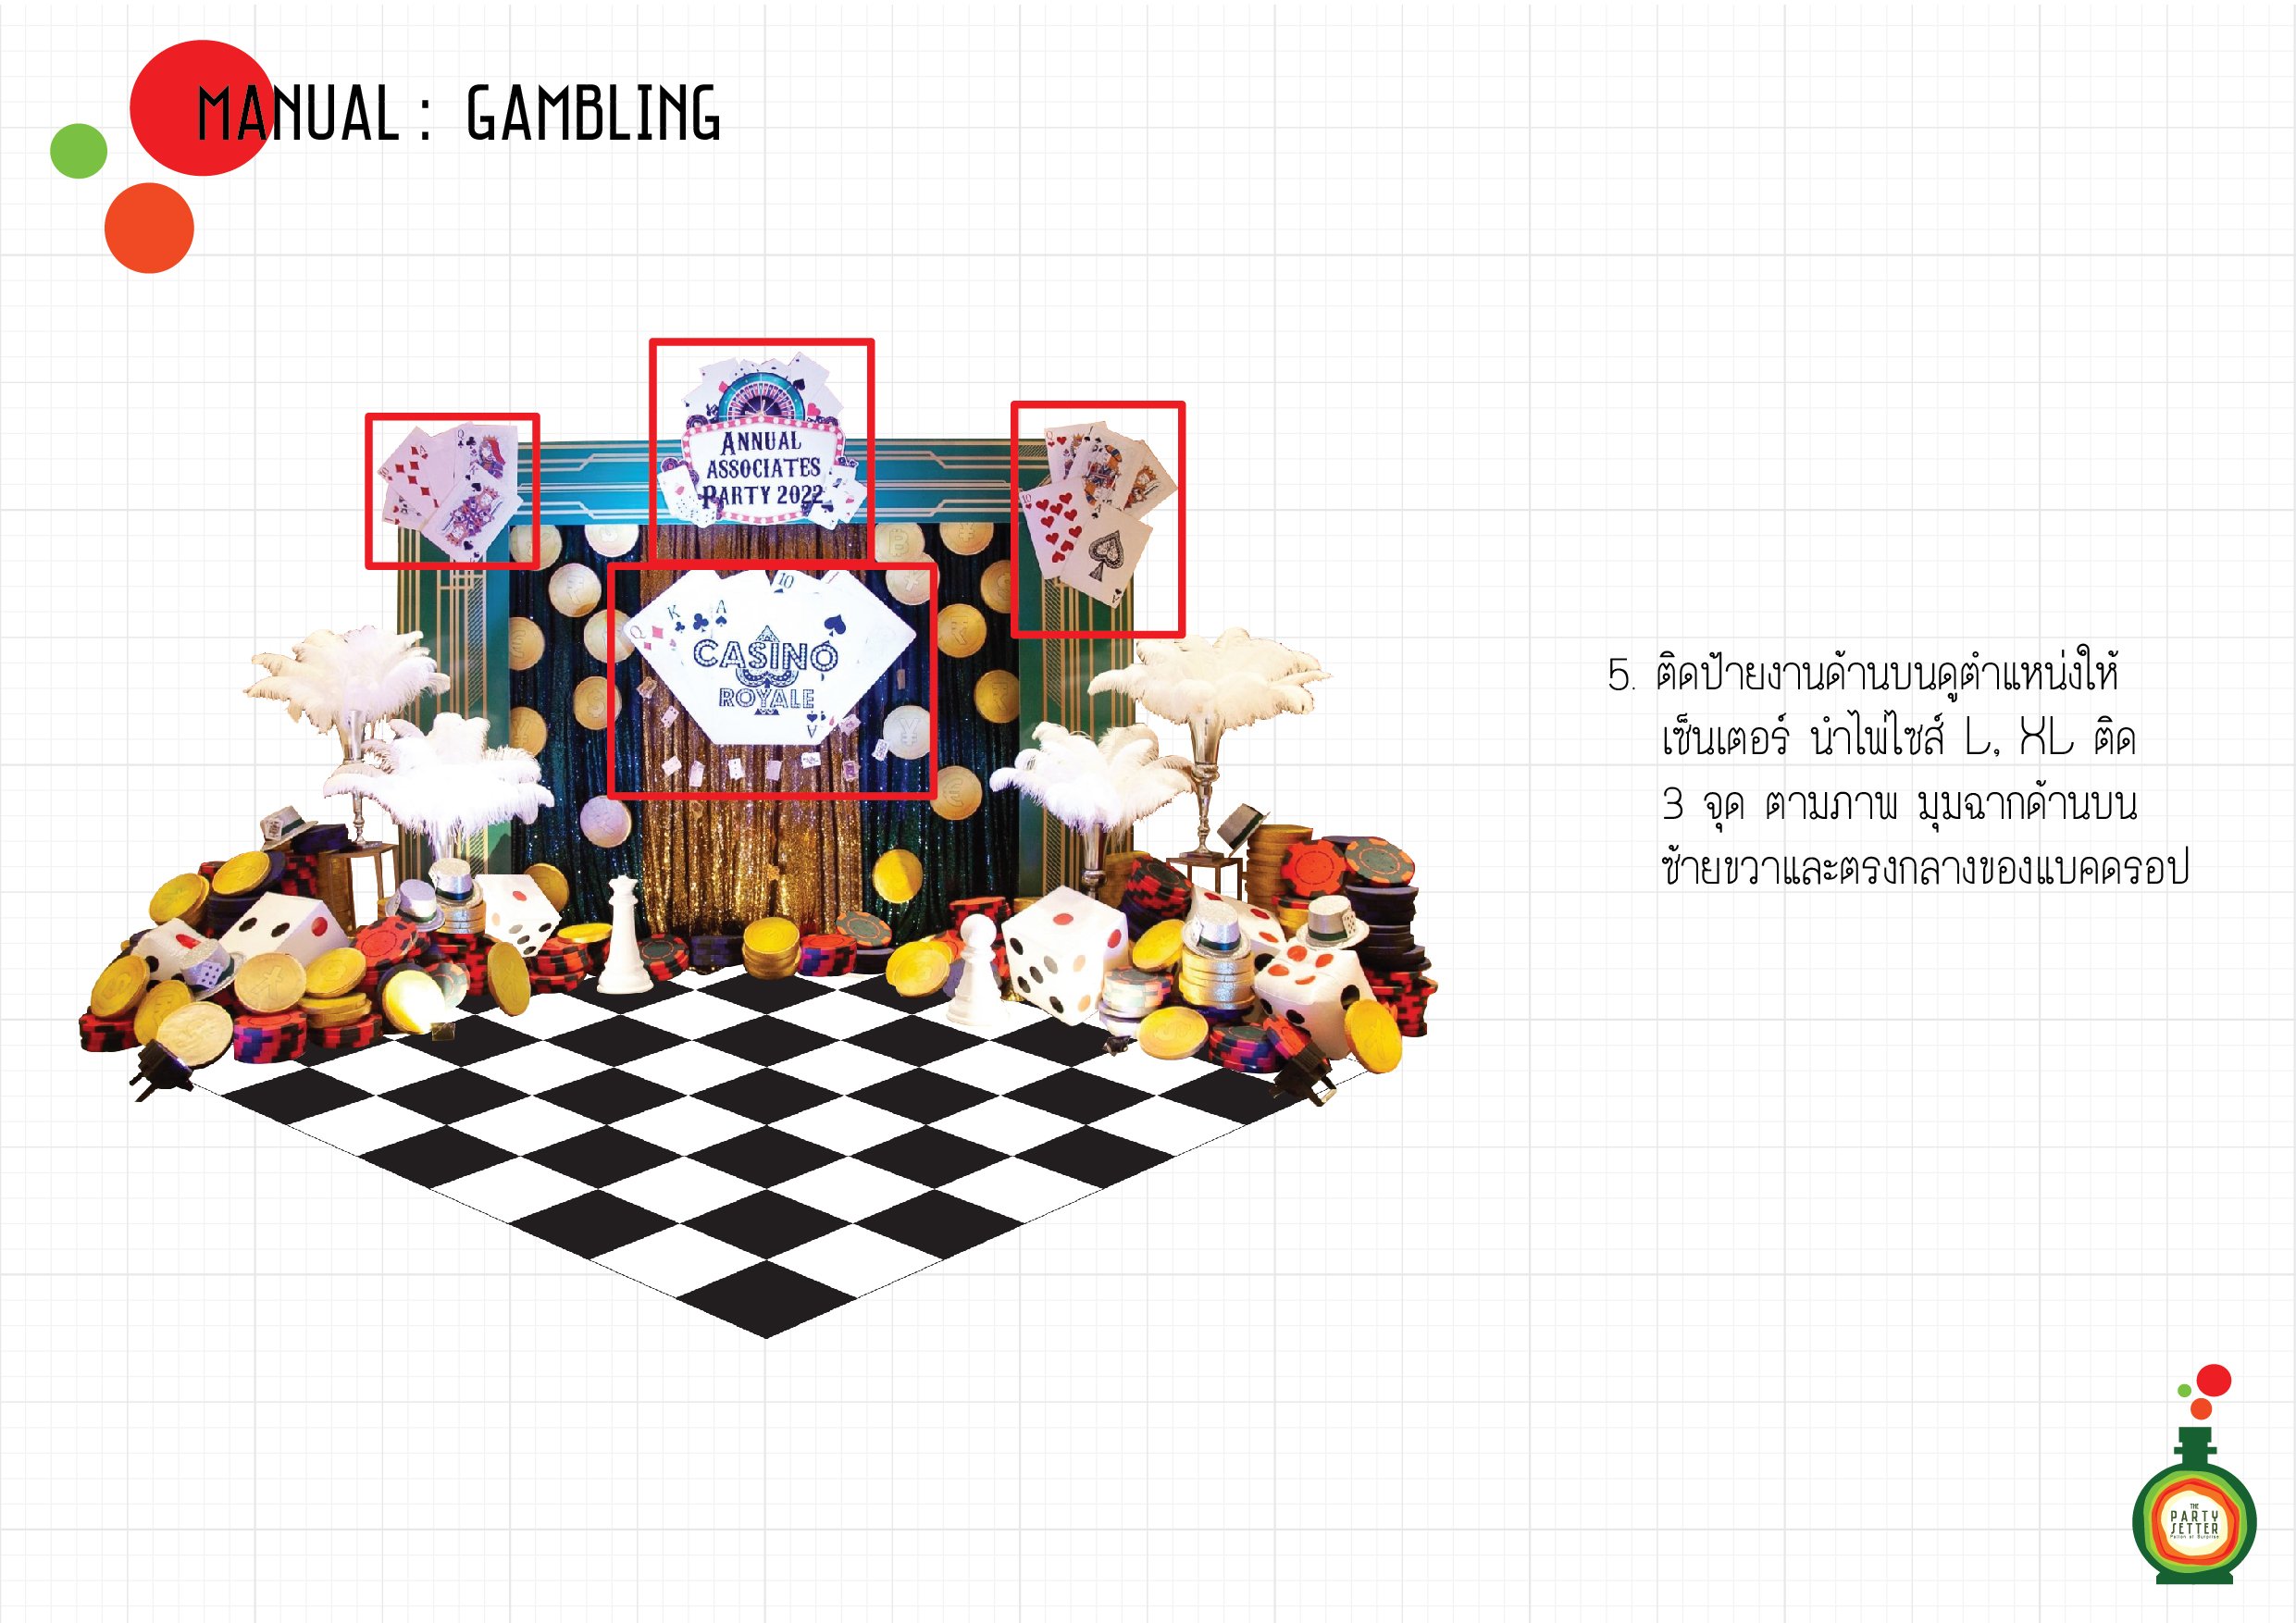 Manual_Gambling-05-01.jpg